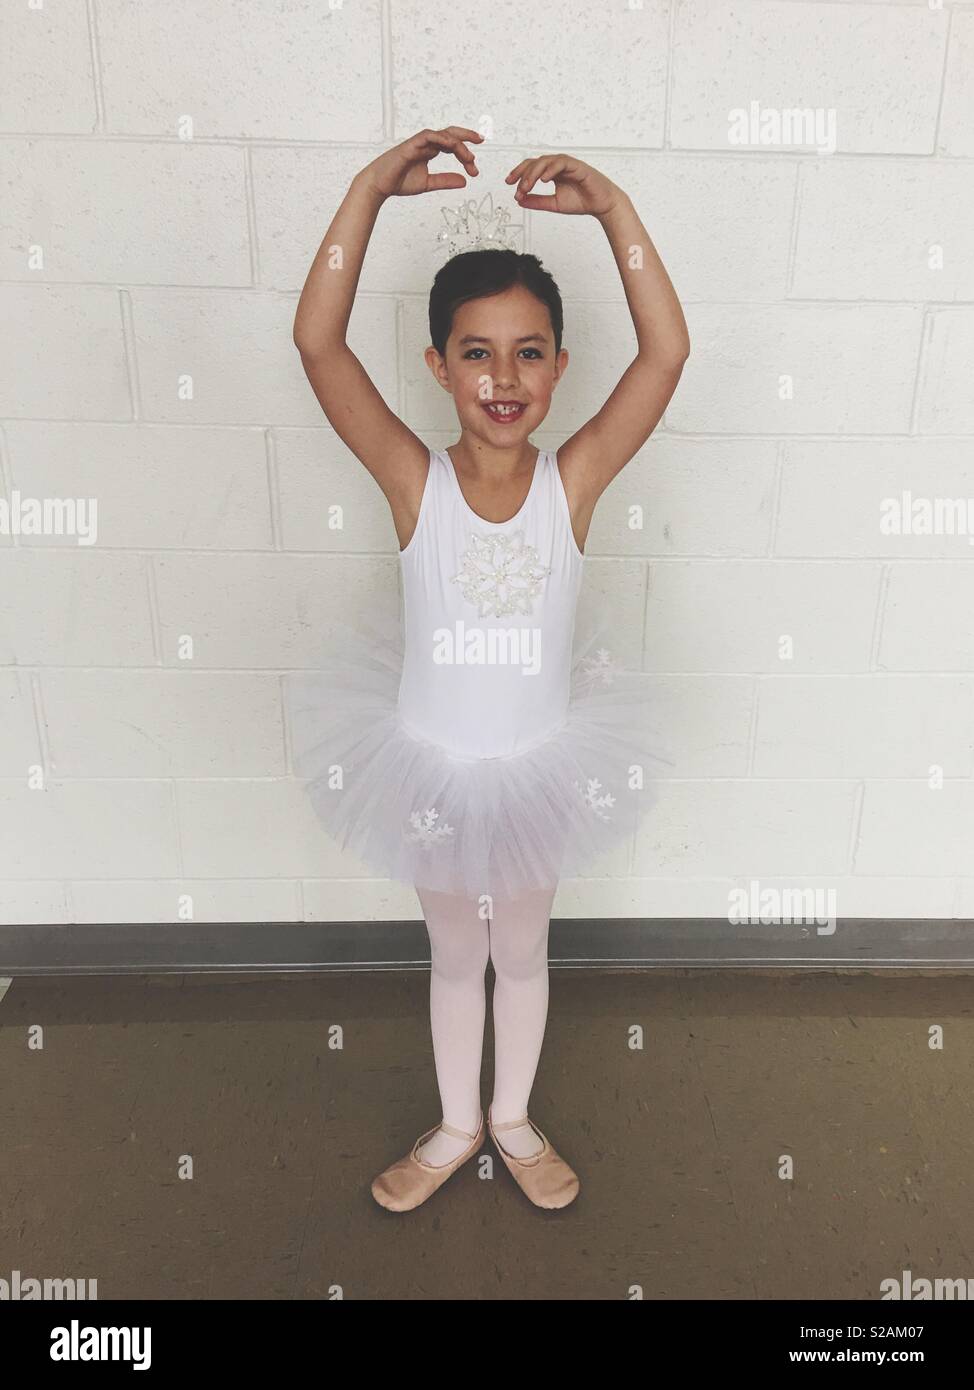 Female child posing in her ballet recital costume. Stock Photo